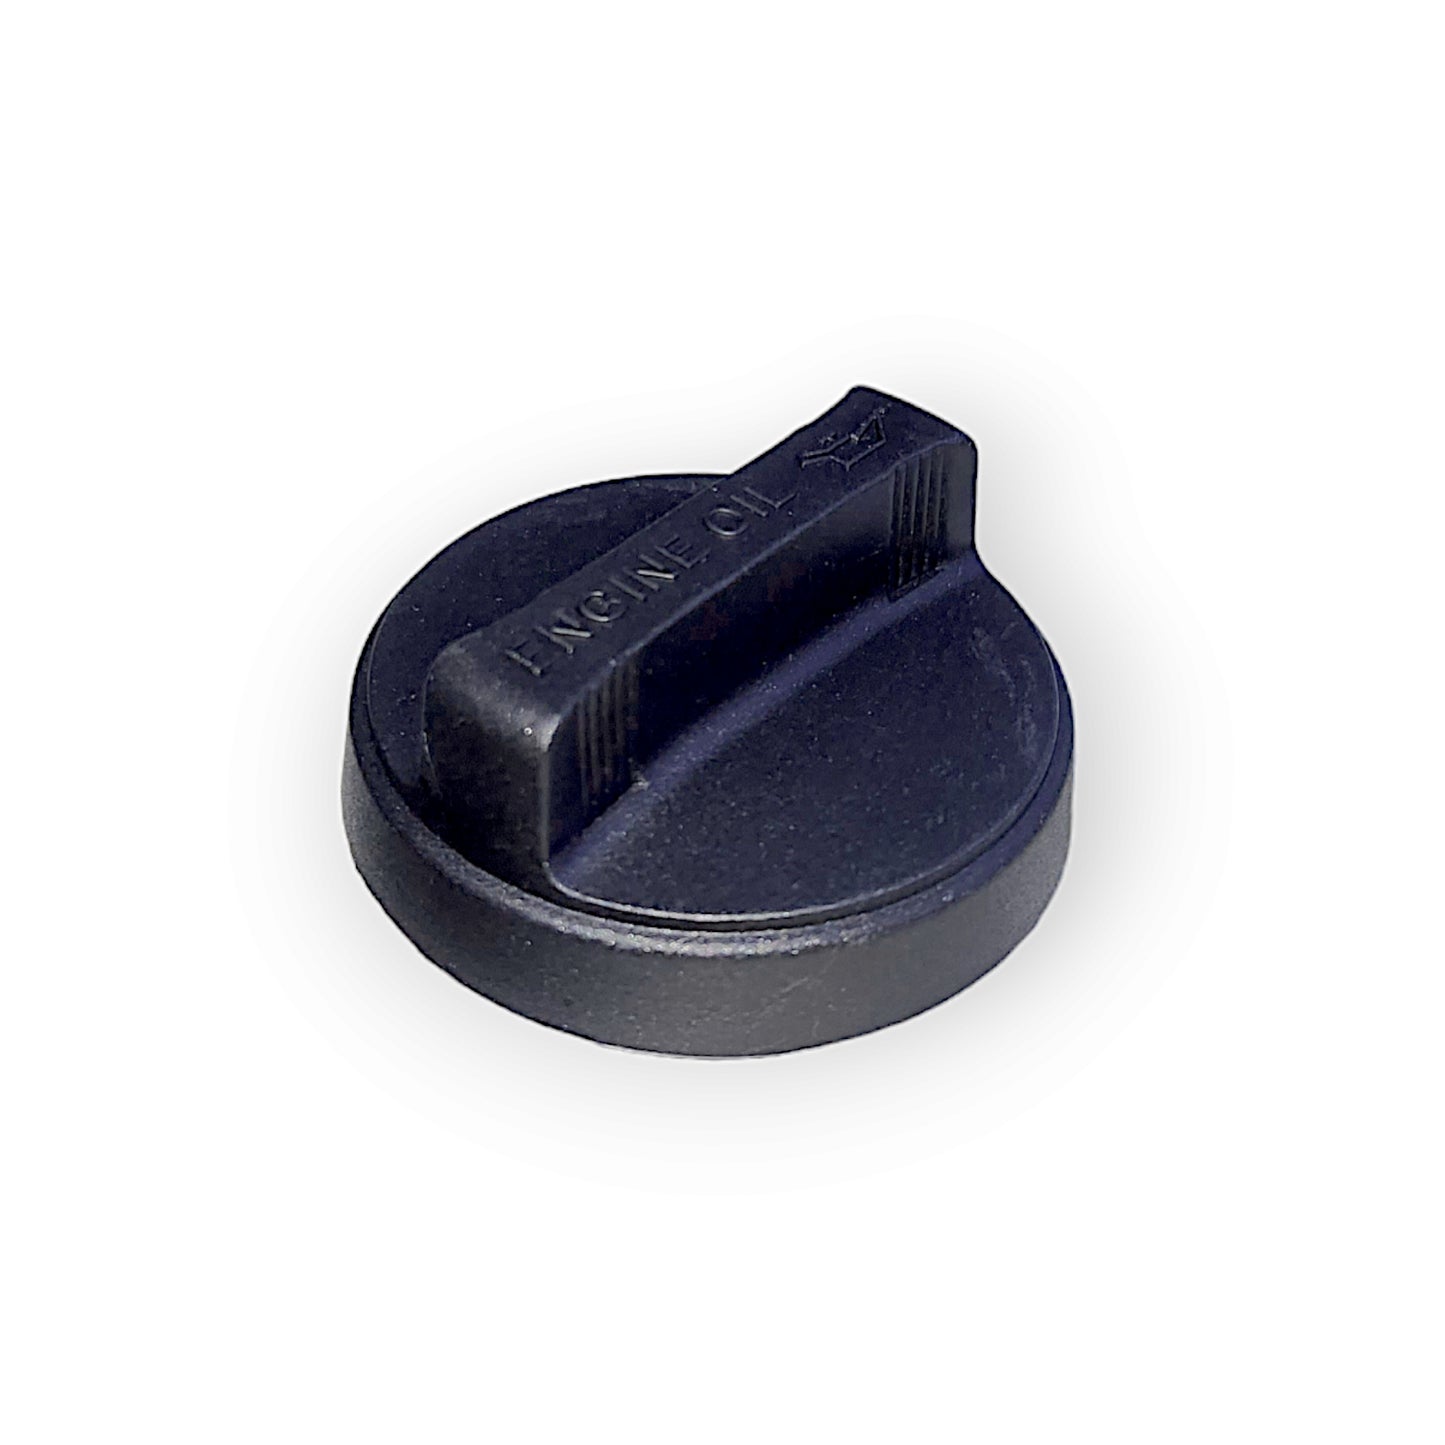 1KD Oil Filler Cap - Standard Replacement Cap